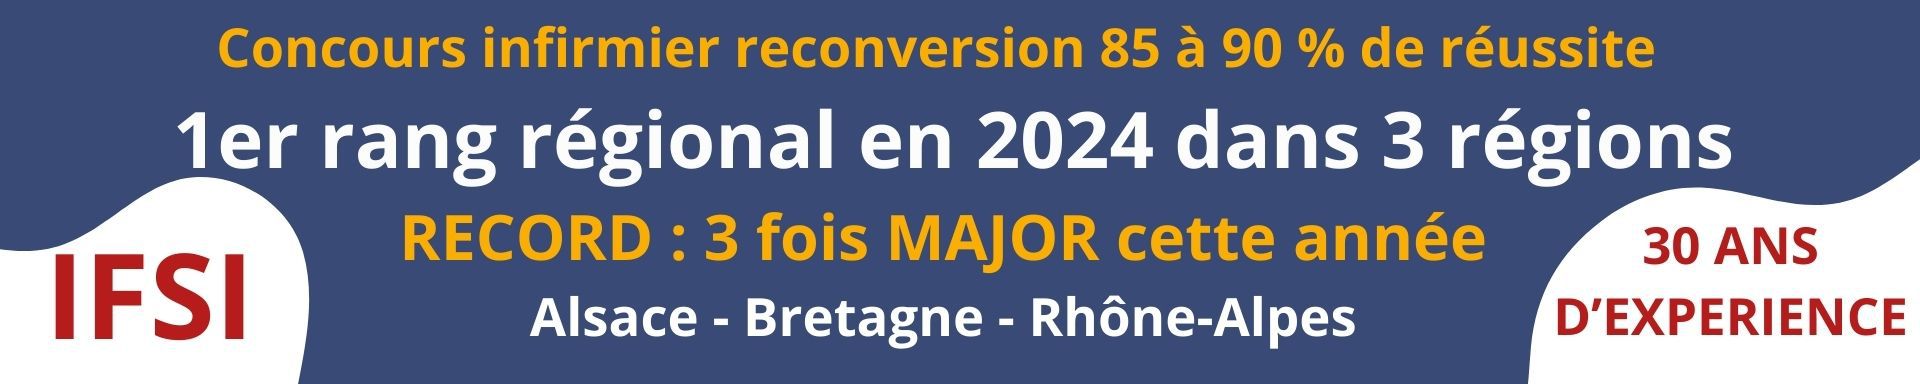 sujets annales 2024 carcassonne